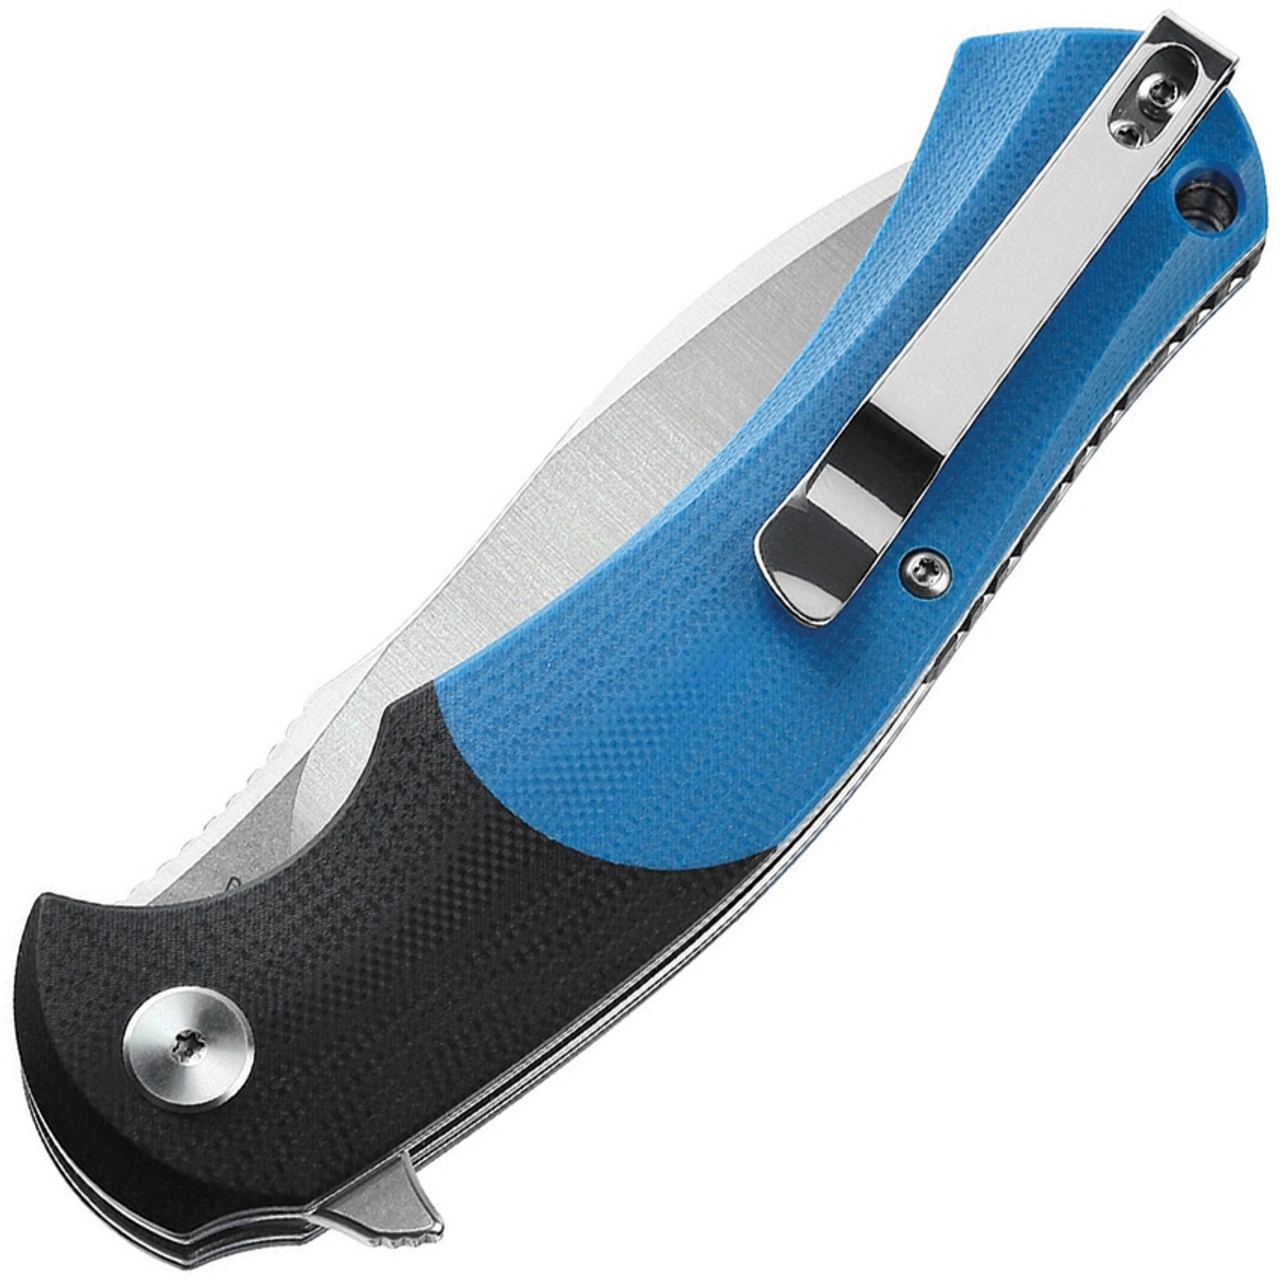 Bestech Knives Penguin Flipper Knife BG32B, 3.6" D2 Stonewash & Satin Plain Blade, Blue & Black G-10 Handle